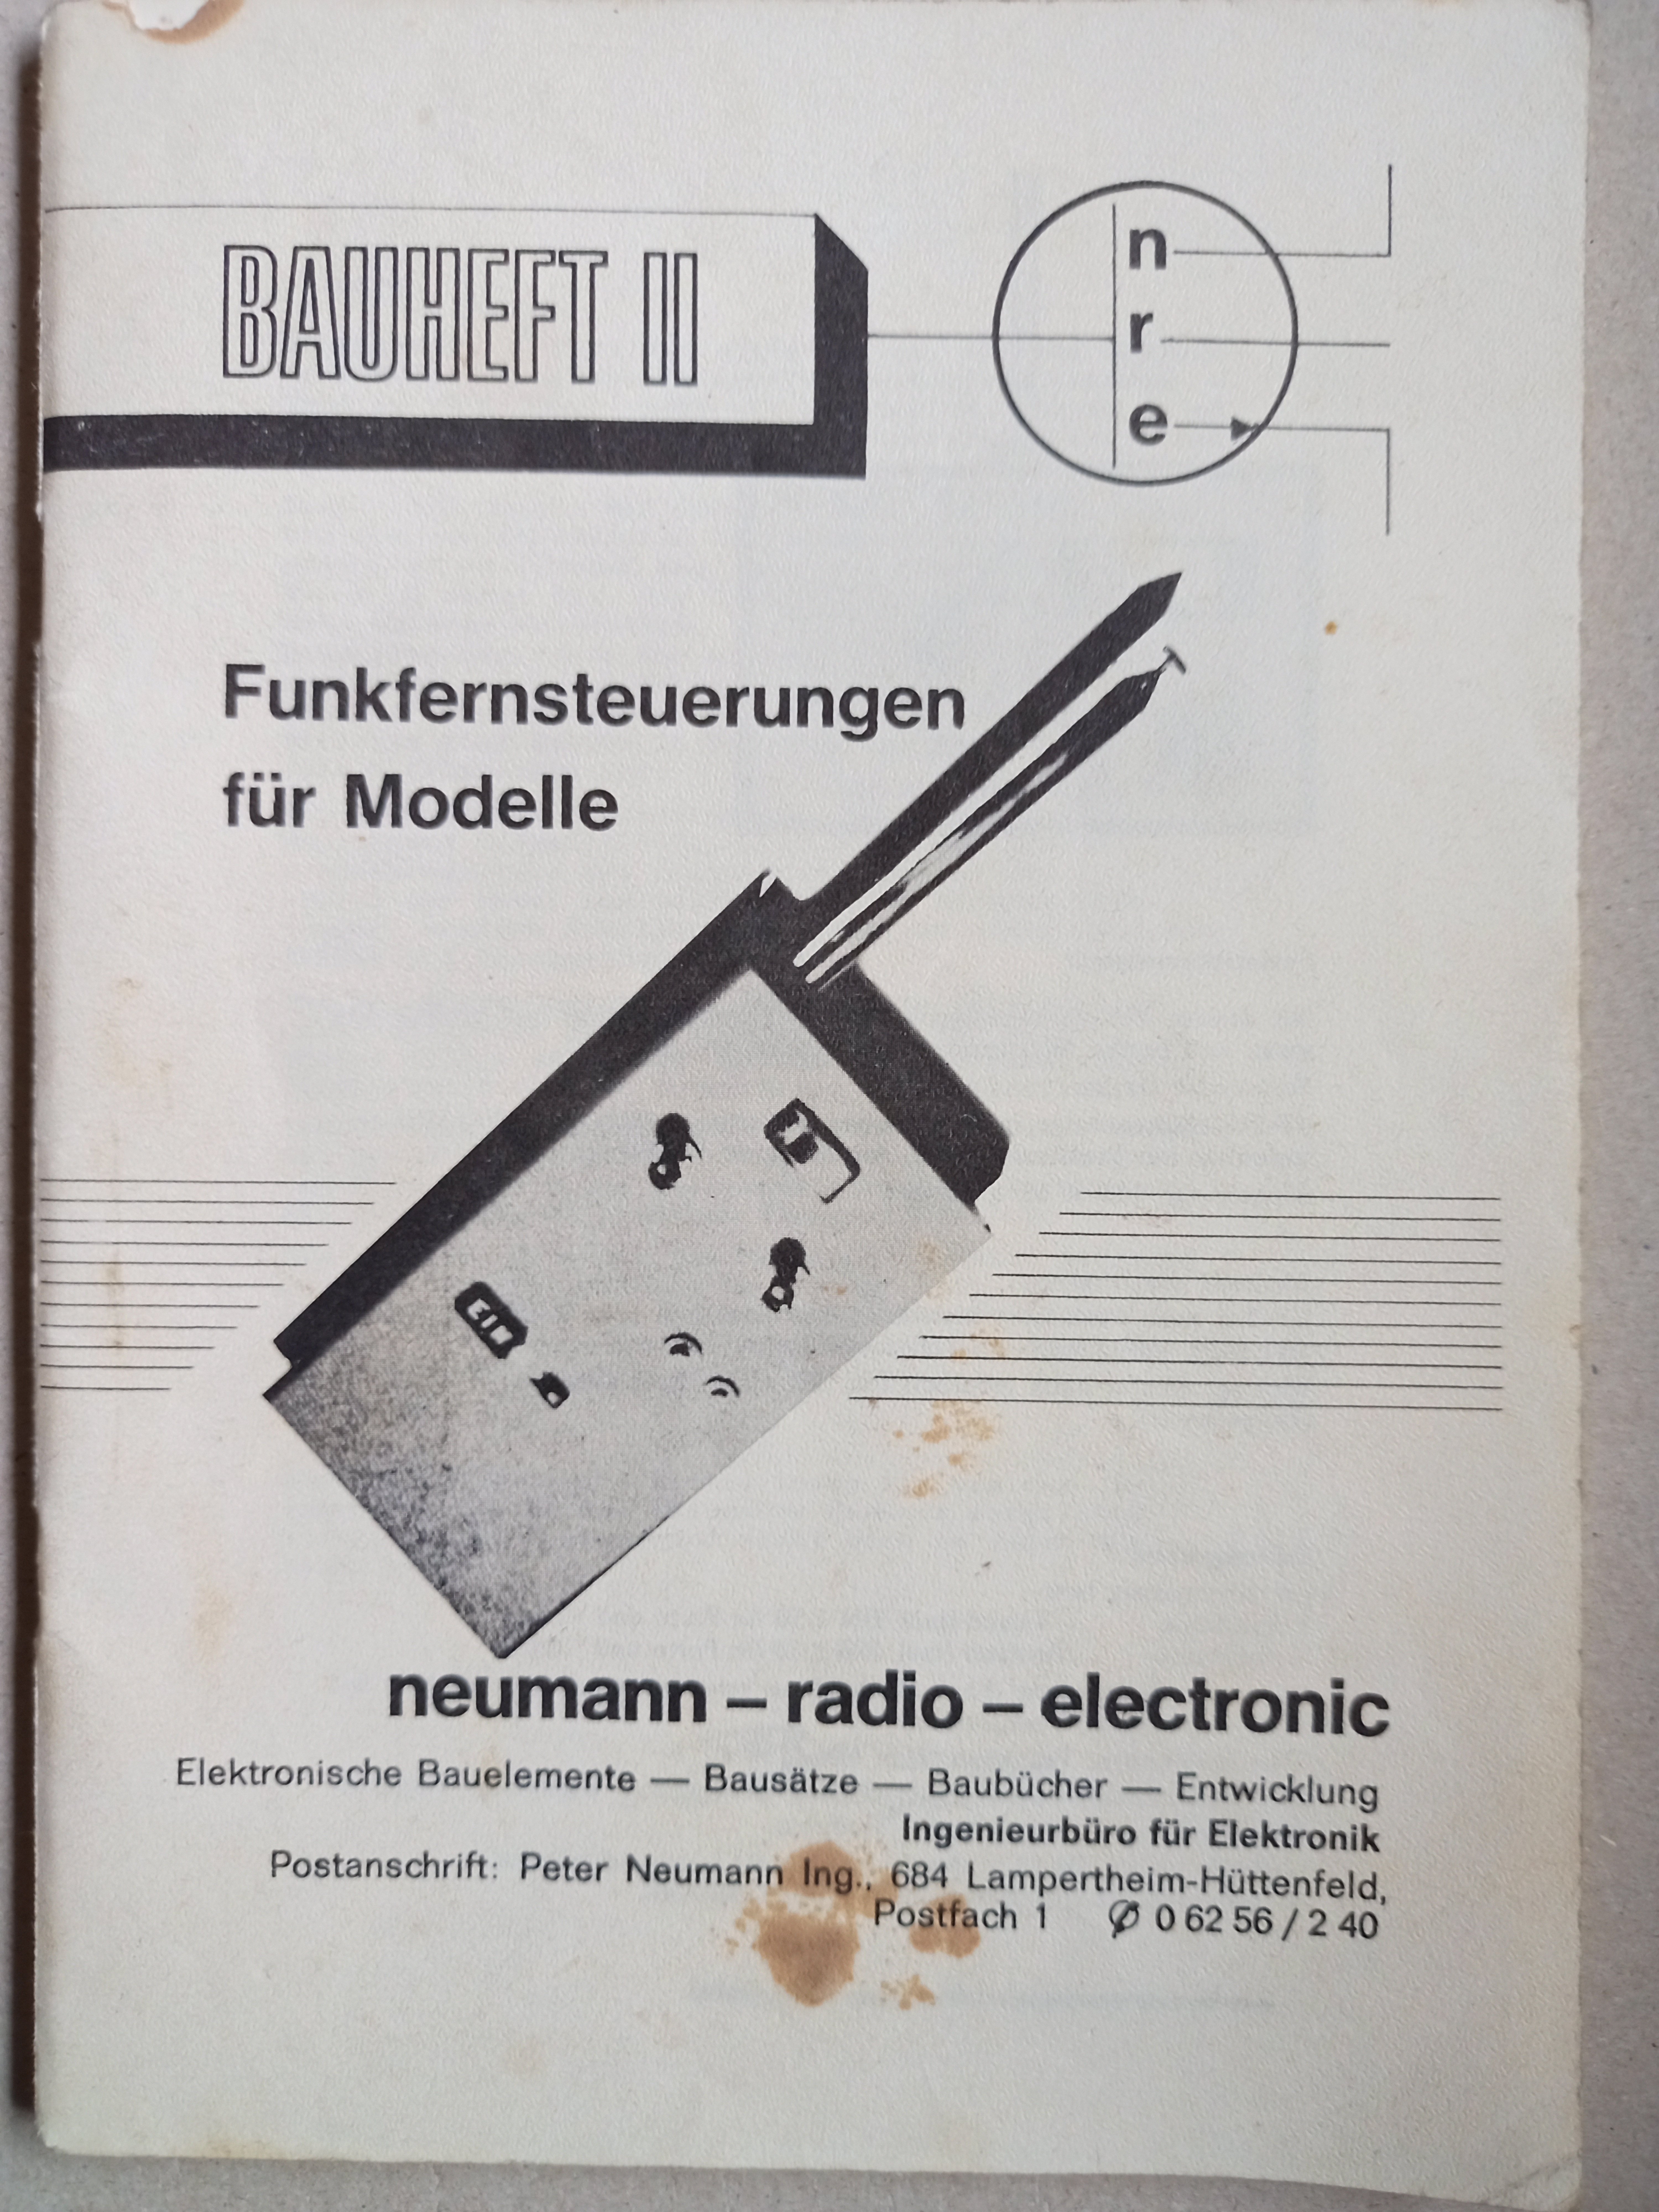 Bauheft II Neumann Electronic (Deutsches Segelflugmuseum mit Modellflug CC BY-NC-SA)